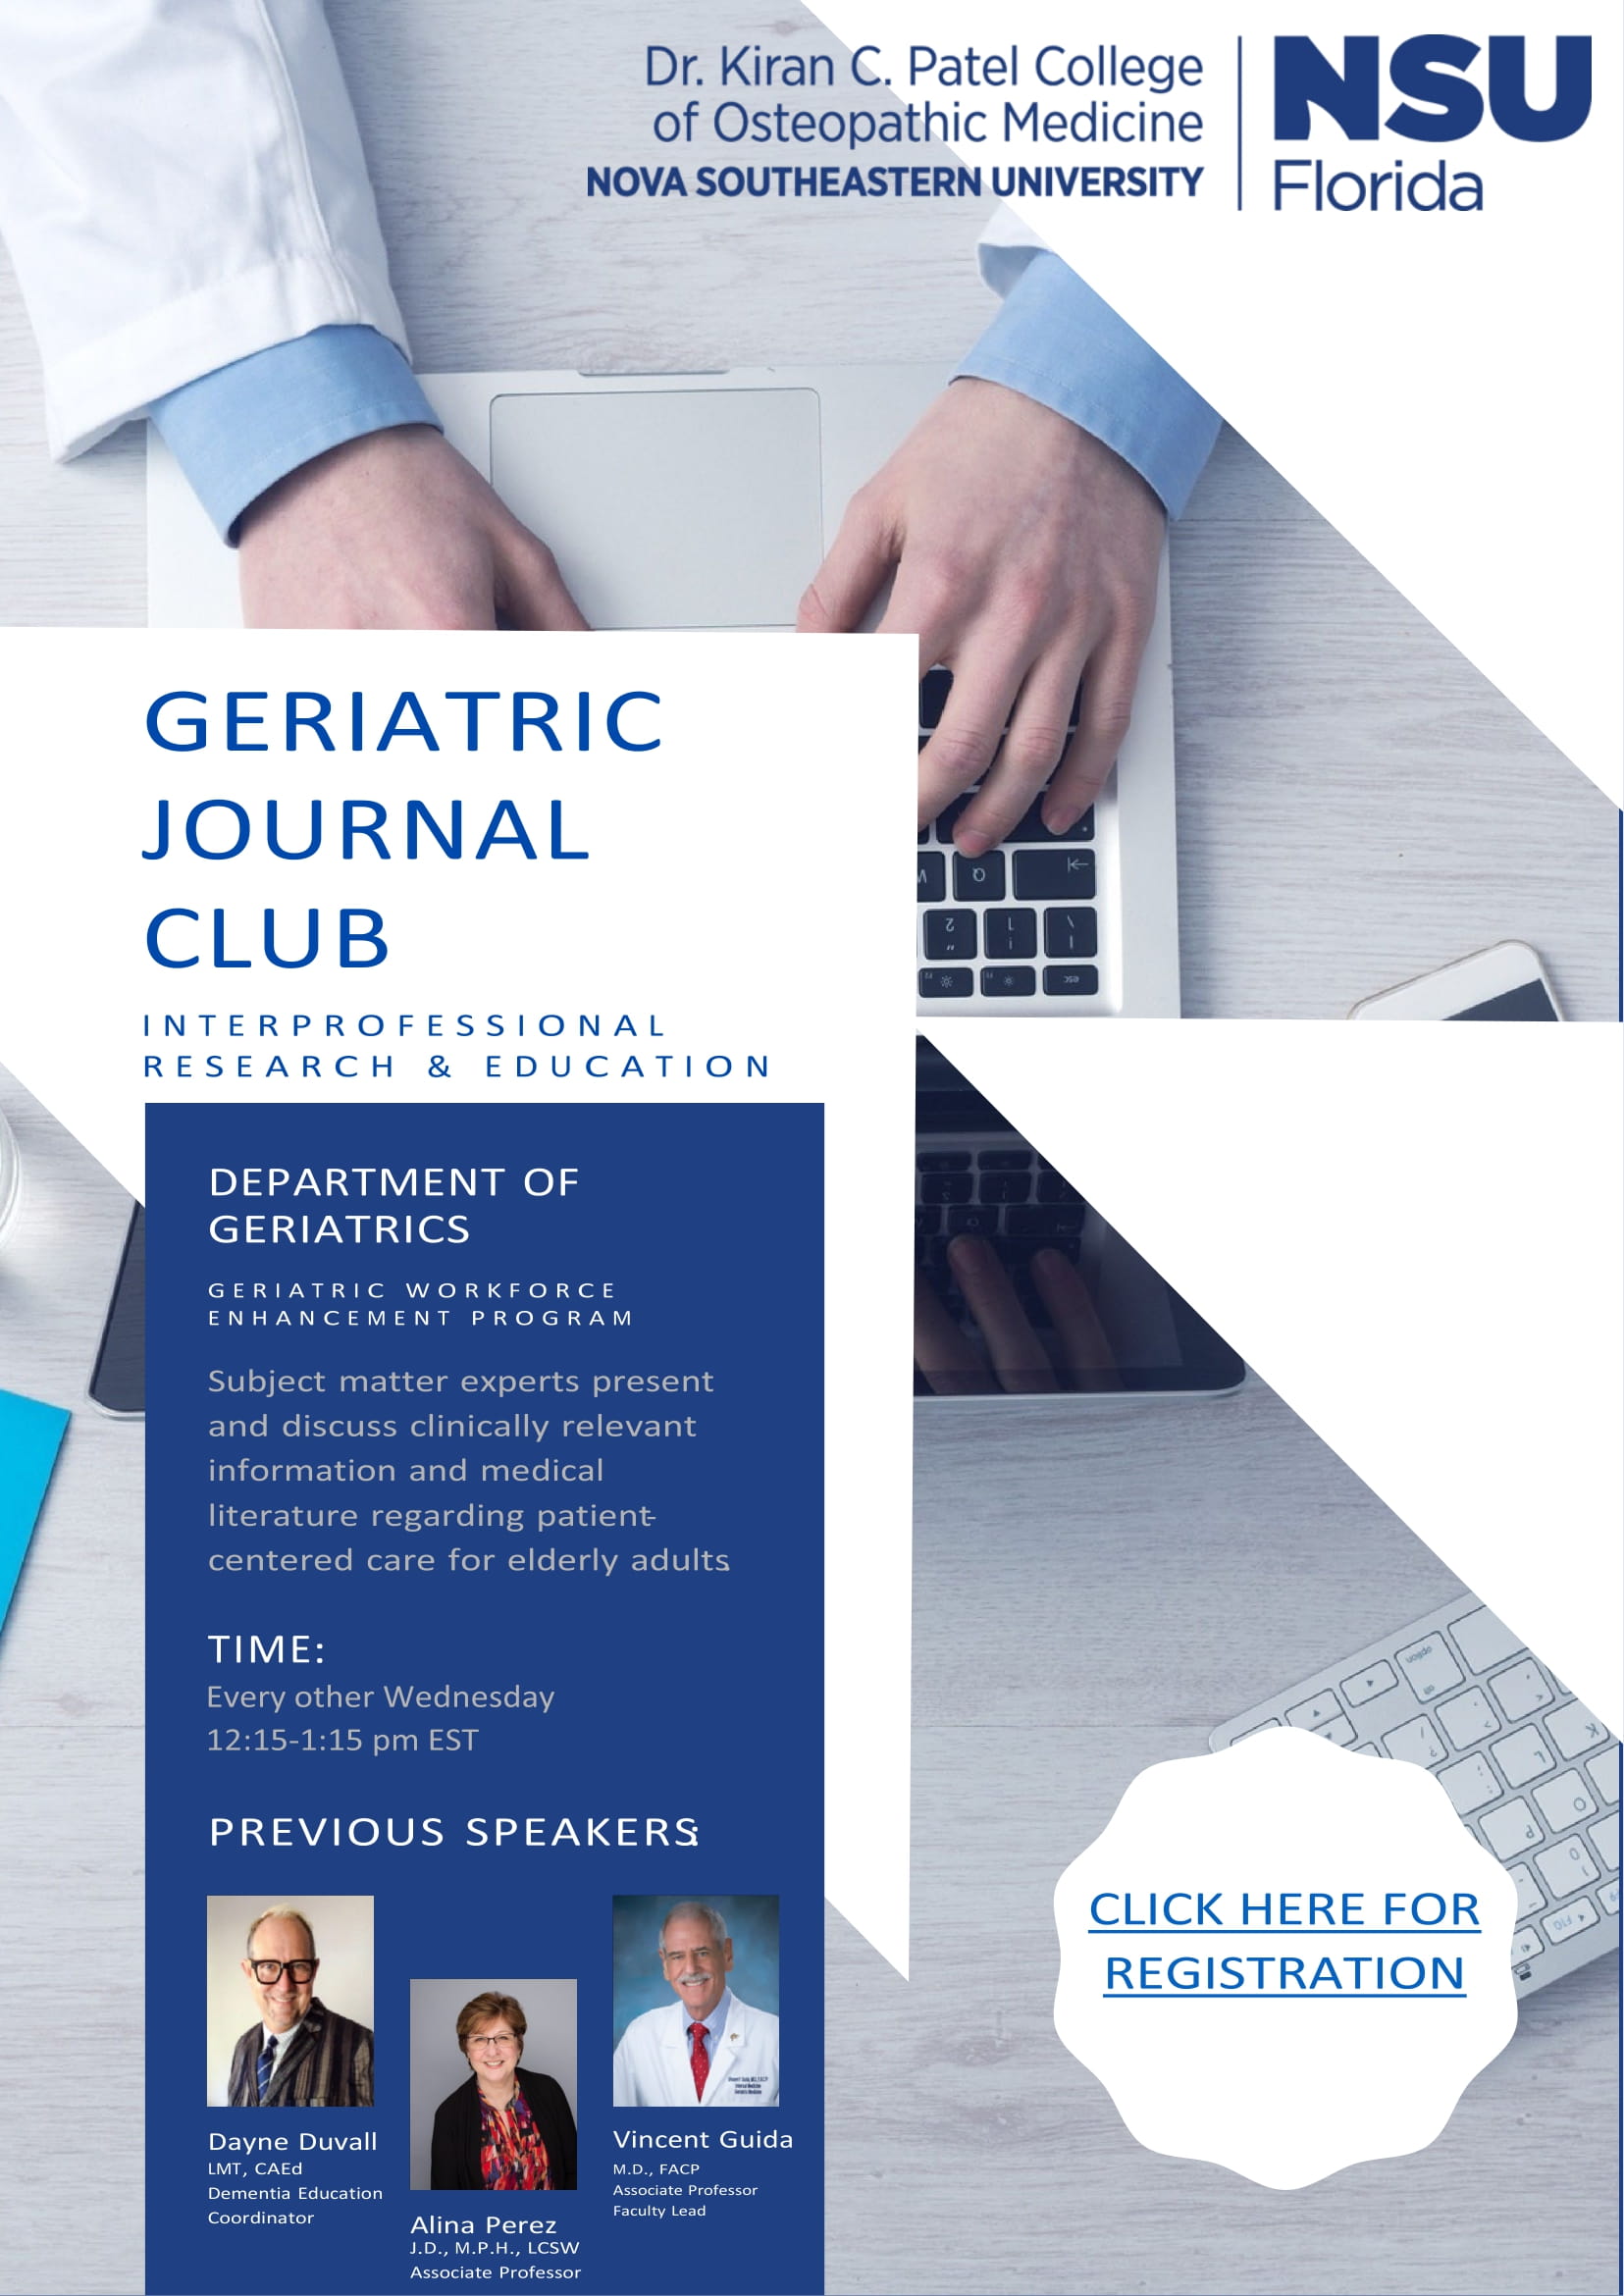 Geriatric Journal Club Flyer General - Click for Register